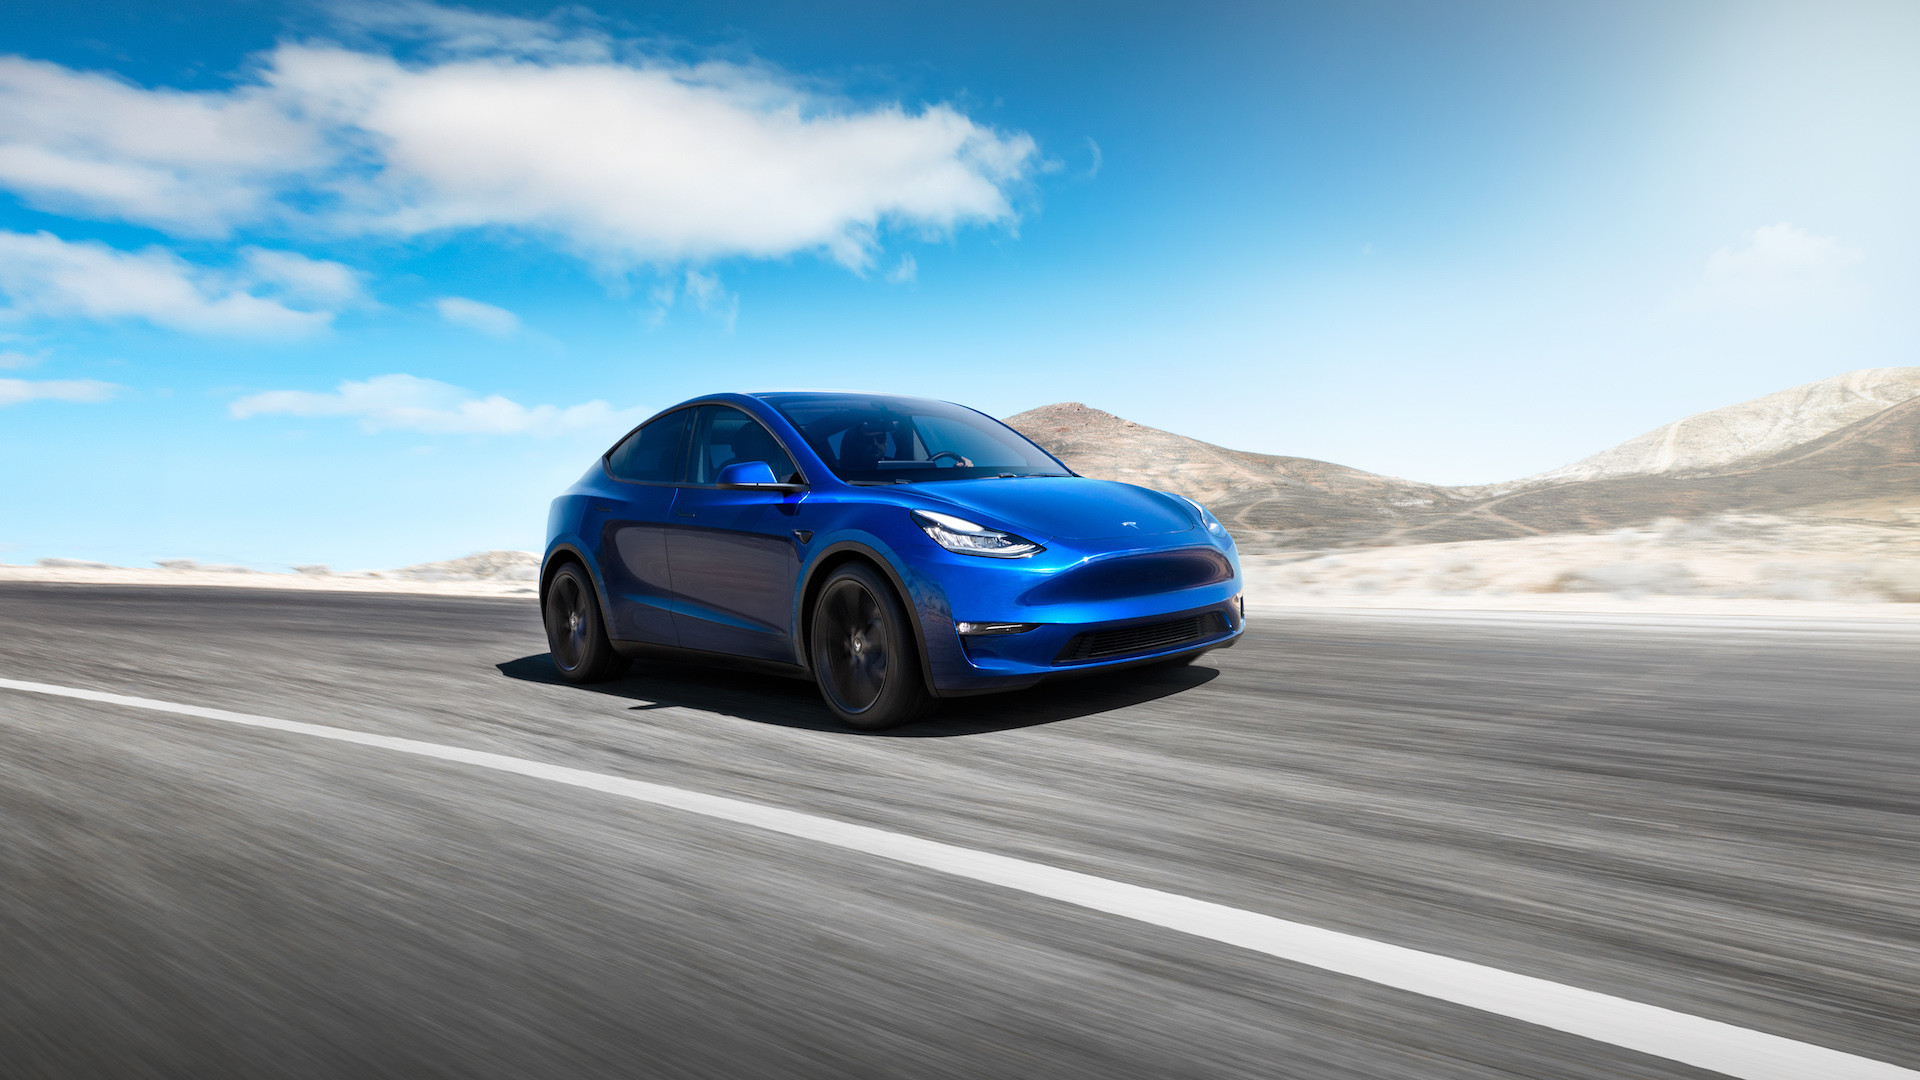 2020 Tesla Model Y gets a better city efficiency rating than Model 3